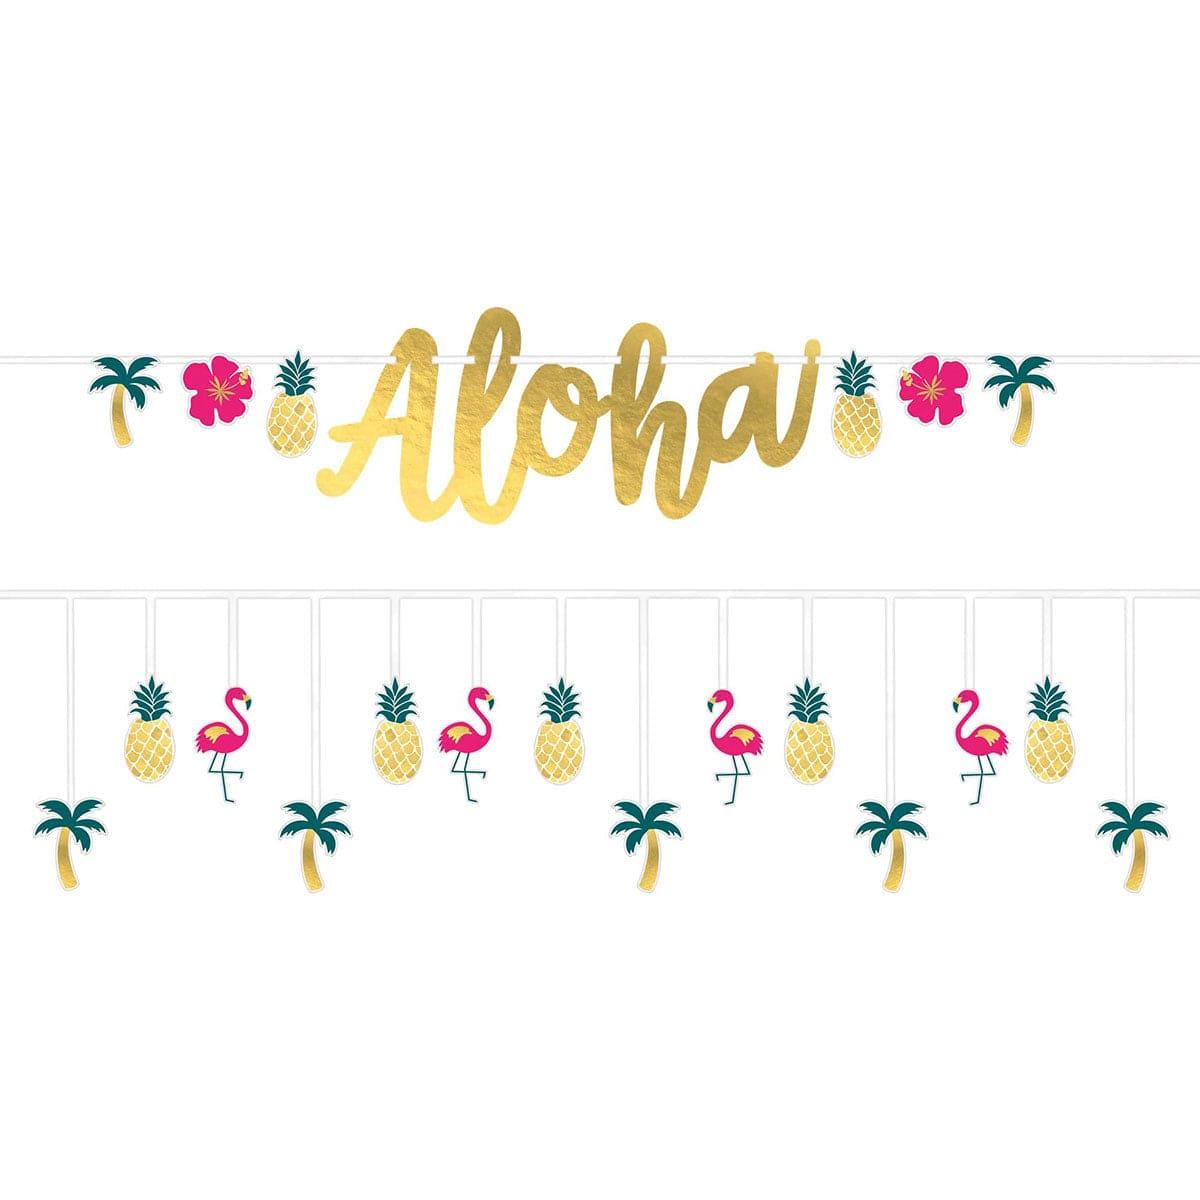 AMSCAN CA Theme Party Luau Banners Kit, "Aloha", 2 Count